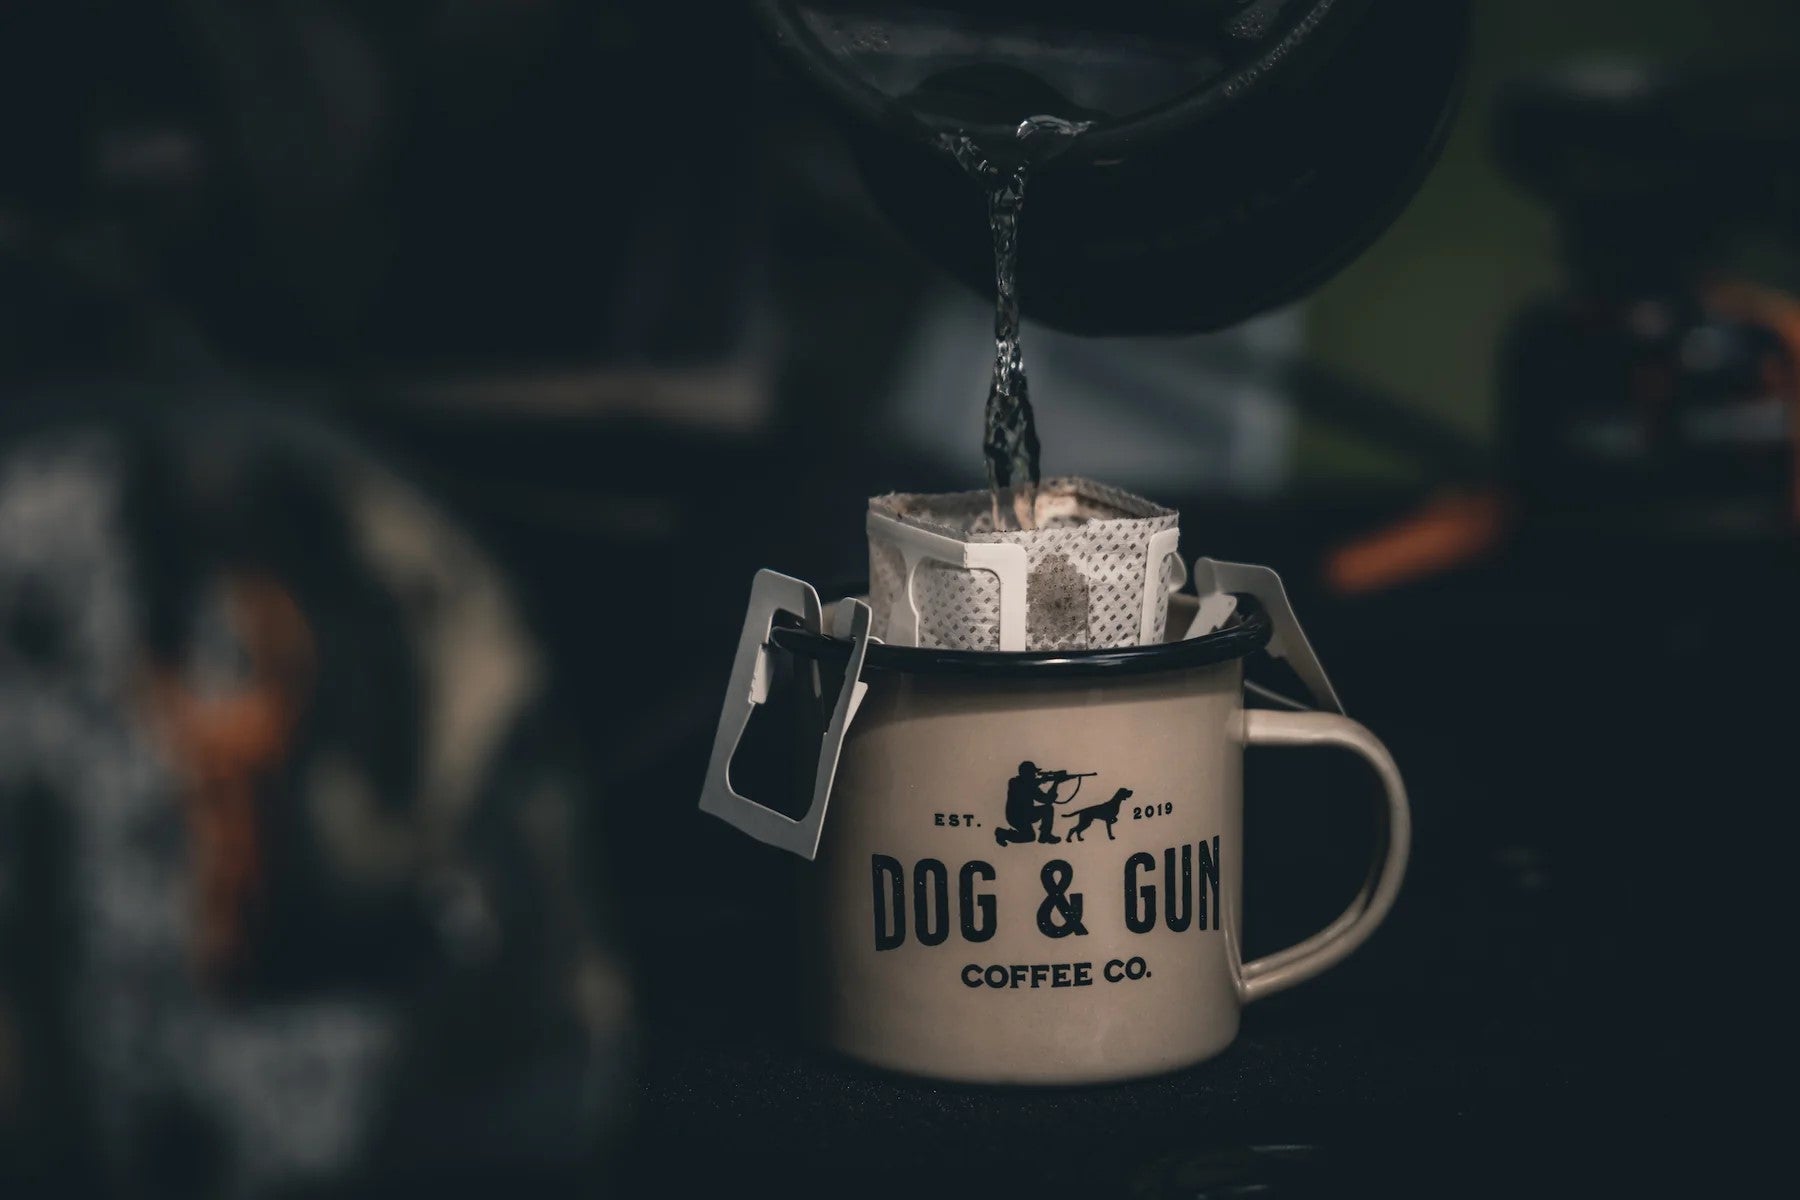 Dog & Gun Coffee